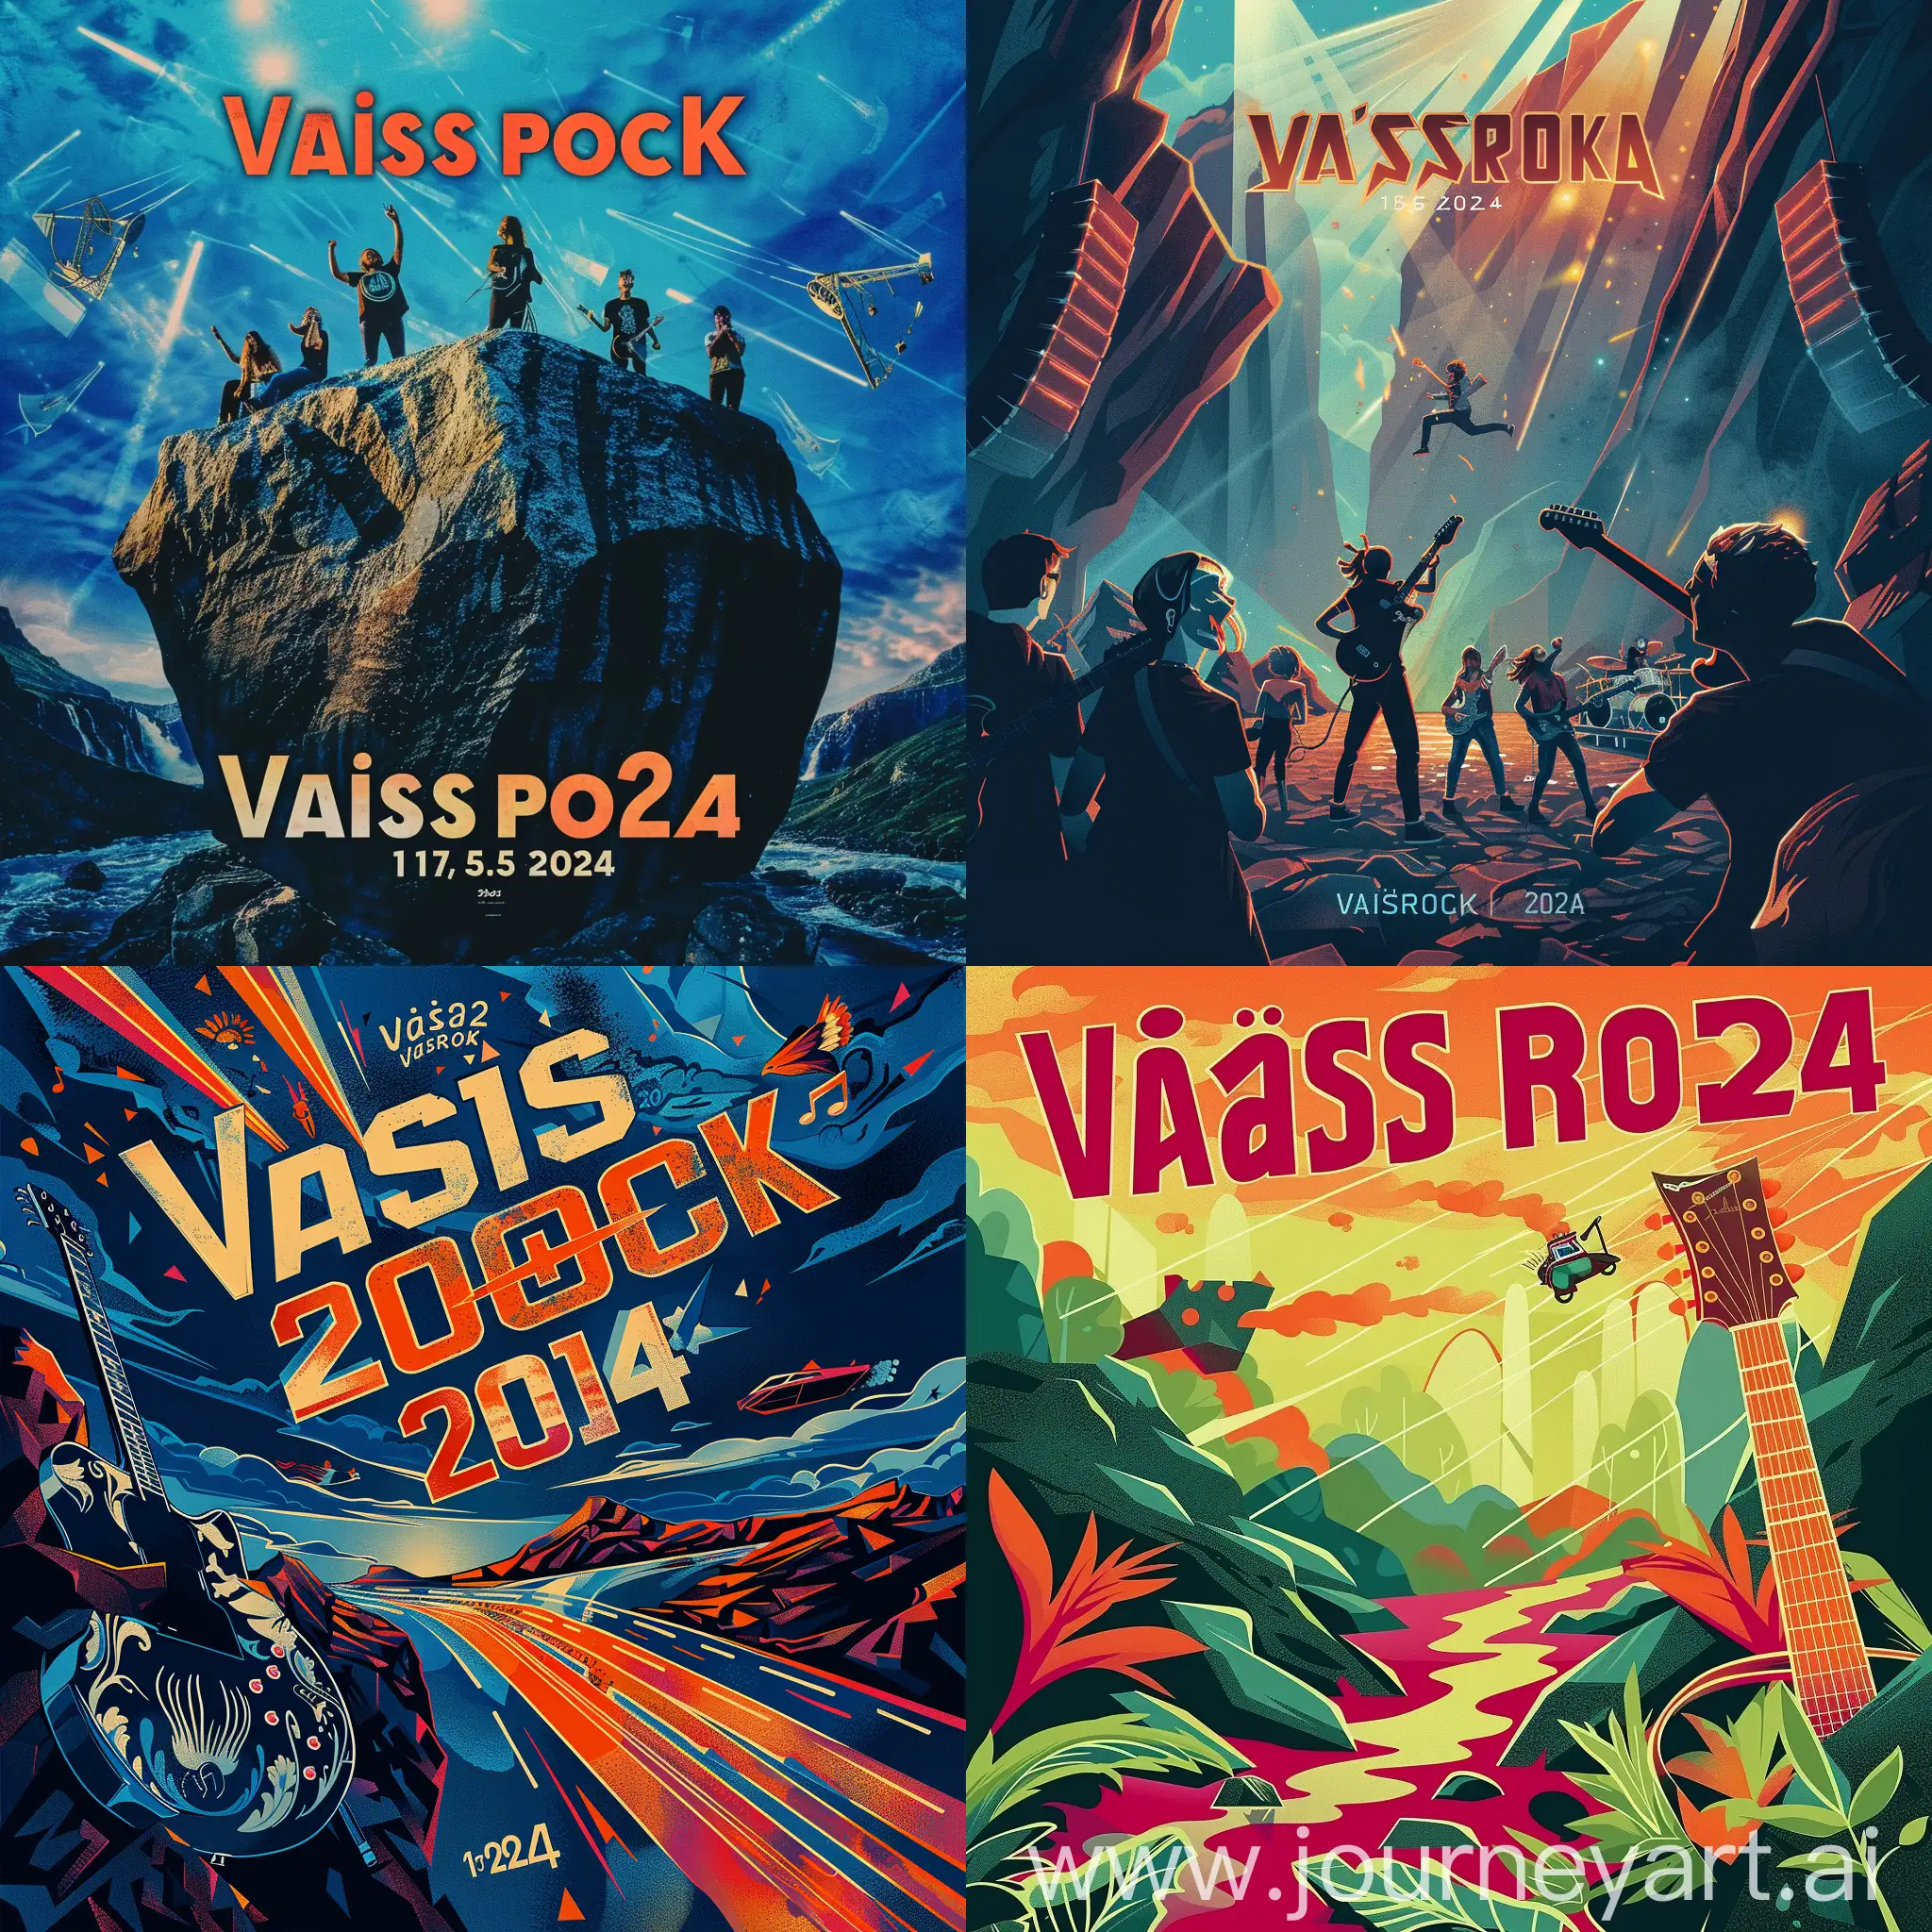 Vaisrock-2024-at-Vaisaaren-koulu-A-Vibrant-Celebration-of-Rock-Music